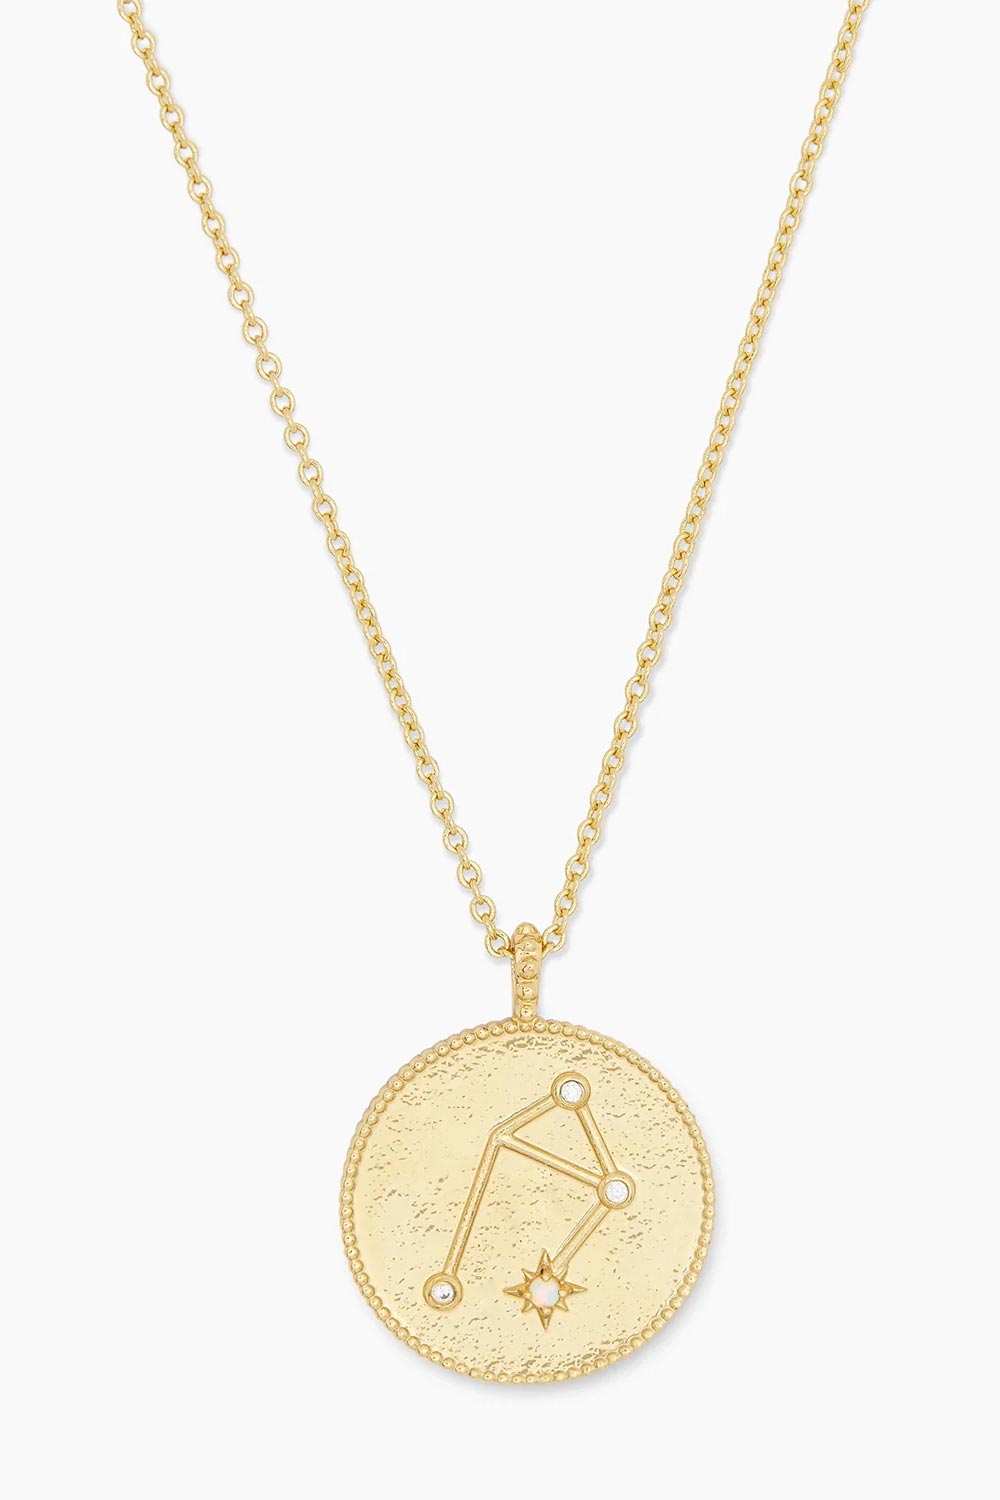 Gorjana - Libra Astrology Coin Necklace - Gold